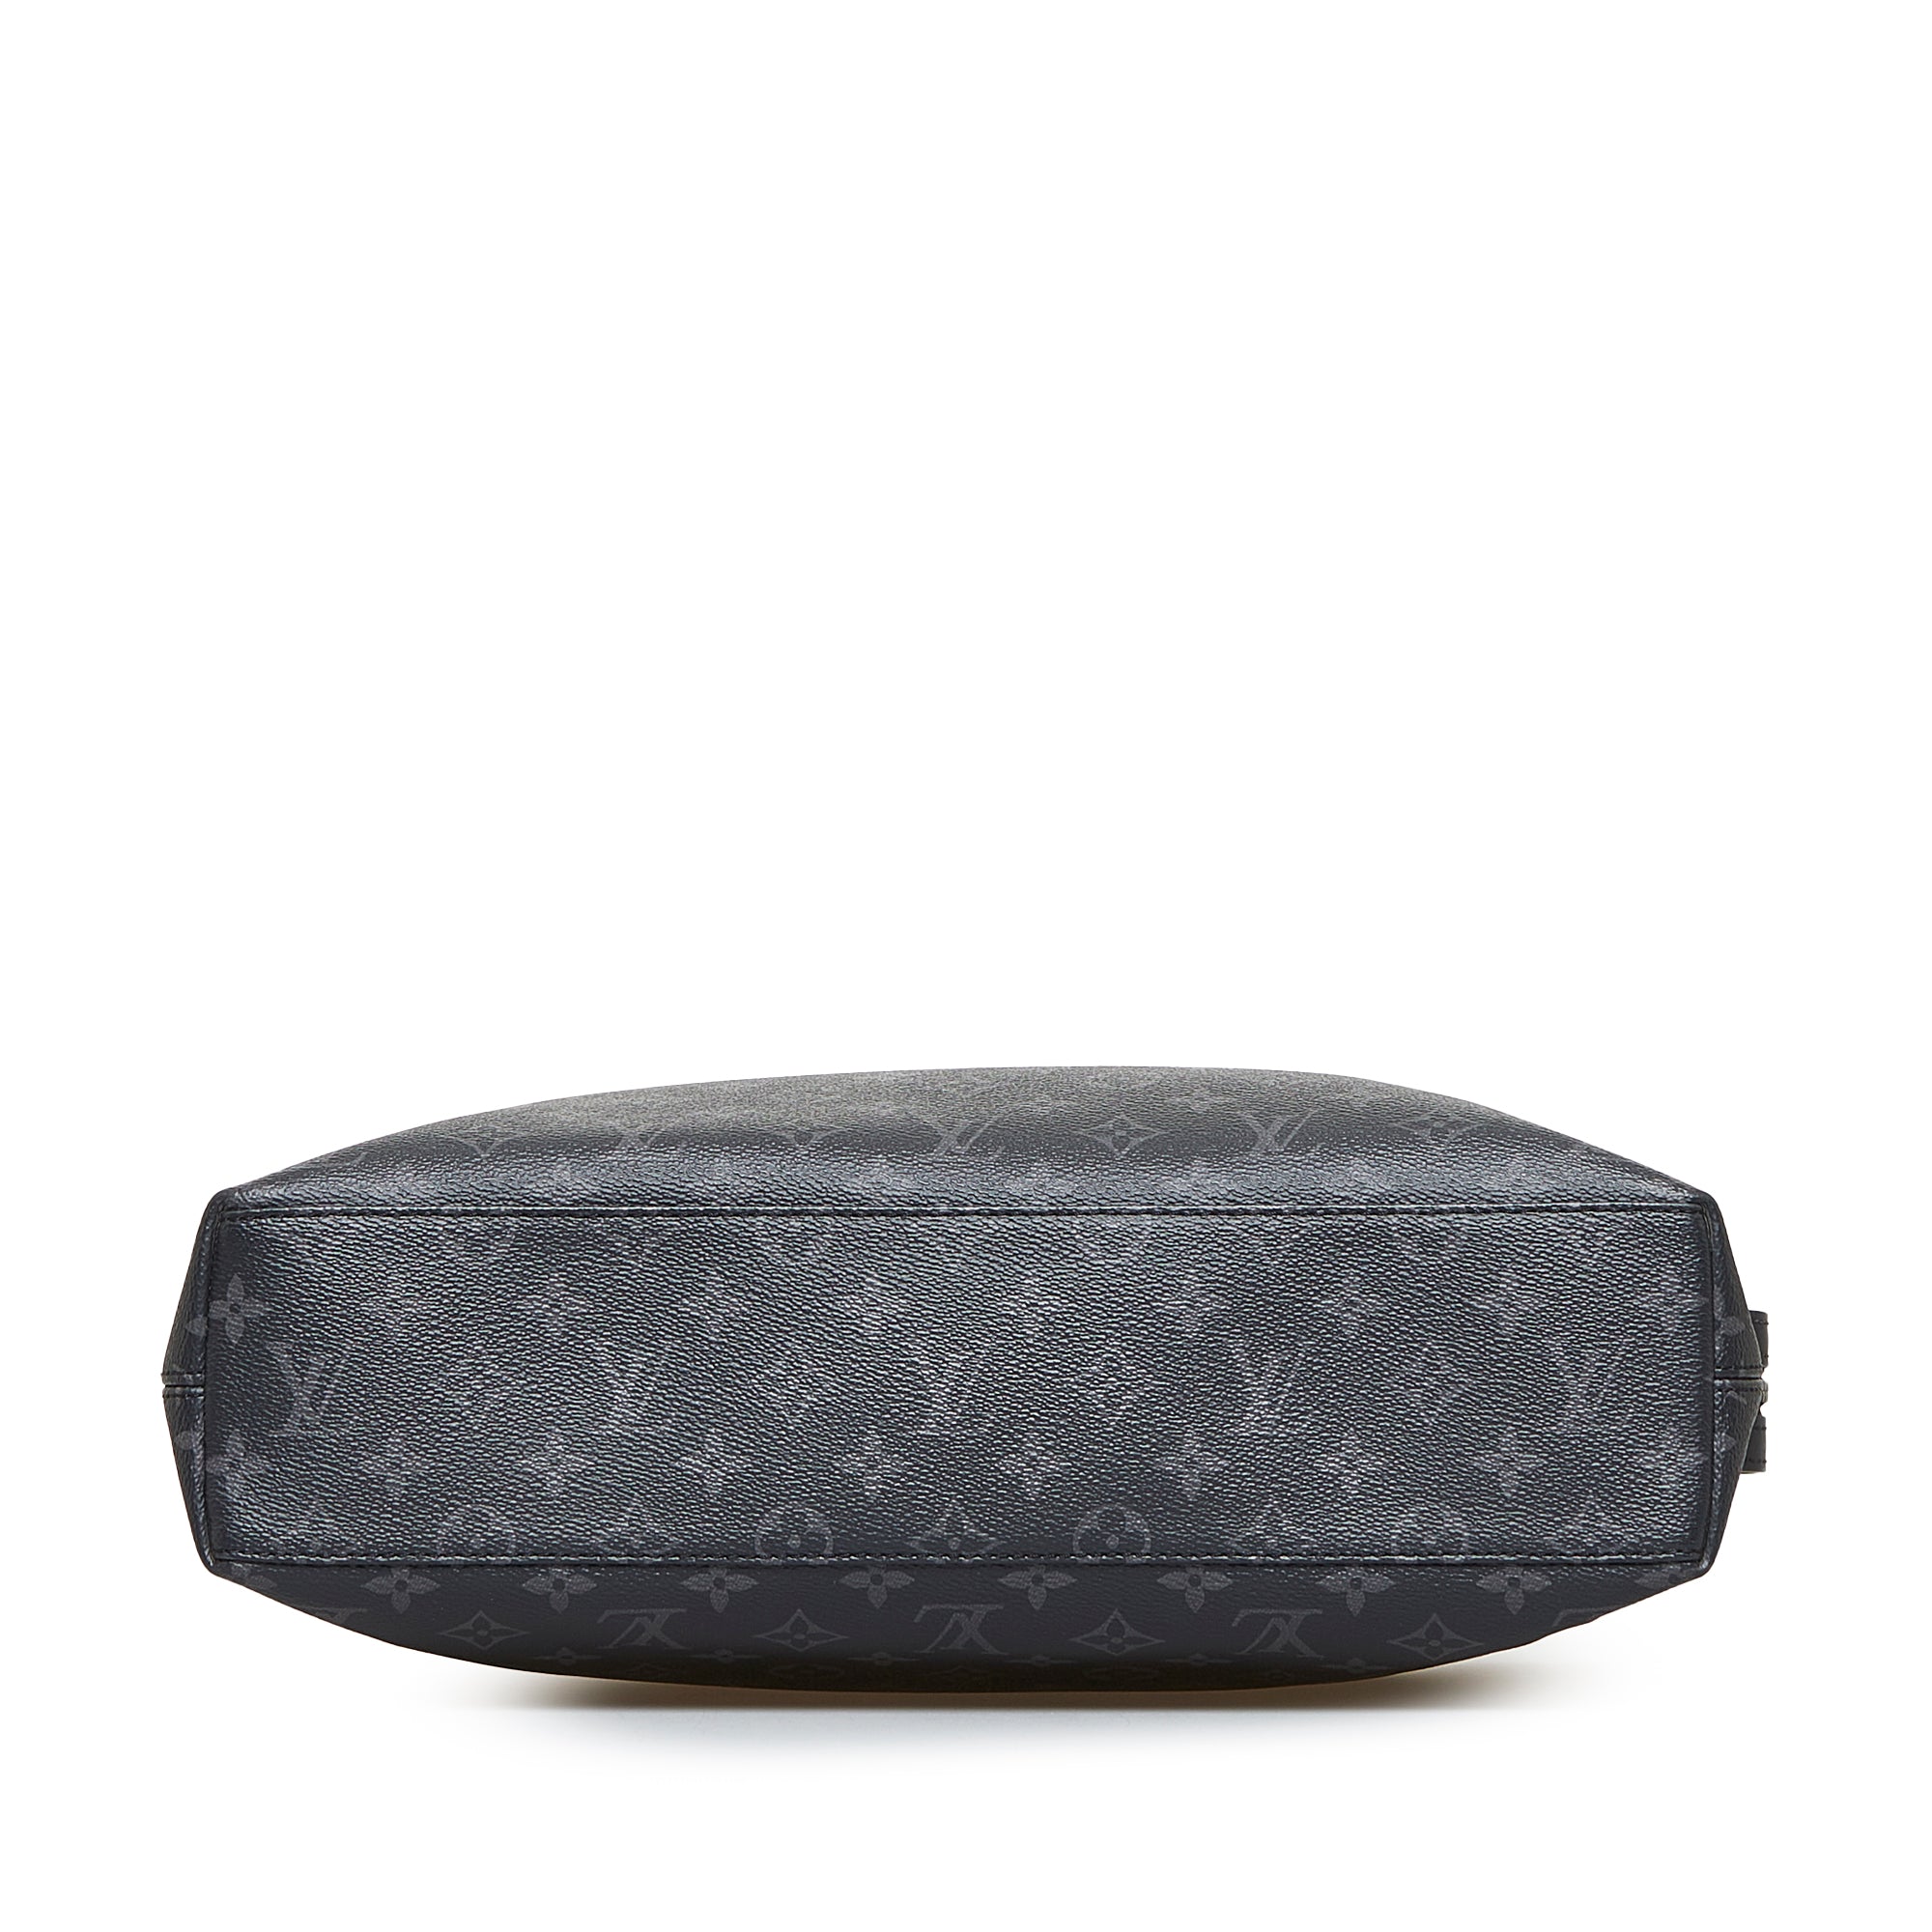 Pre-owned Louis Vuitton 2017 Explorer Monogram Eclipse Handbag In Black